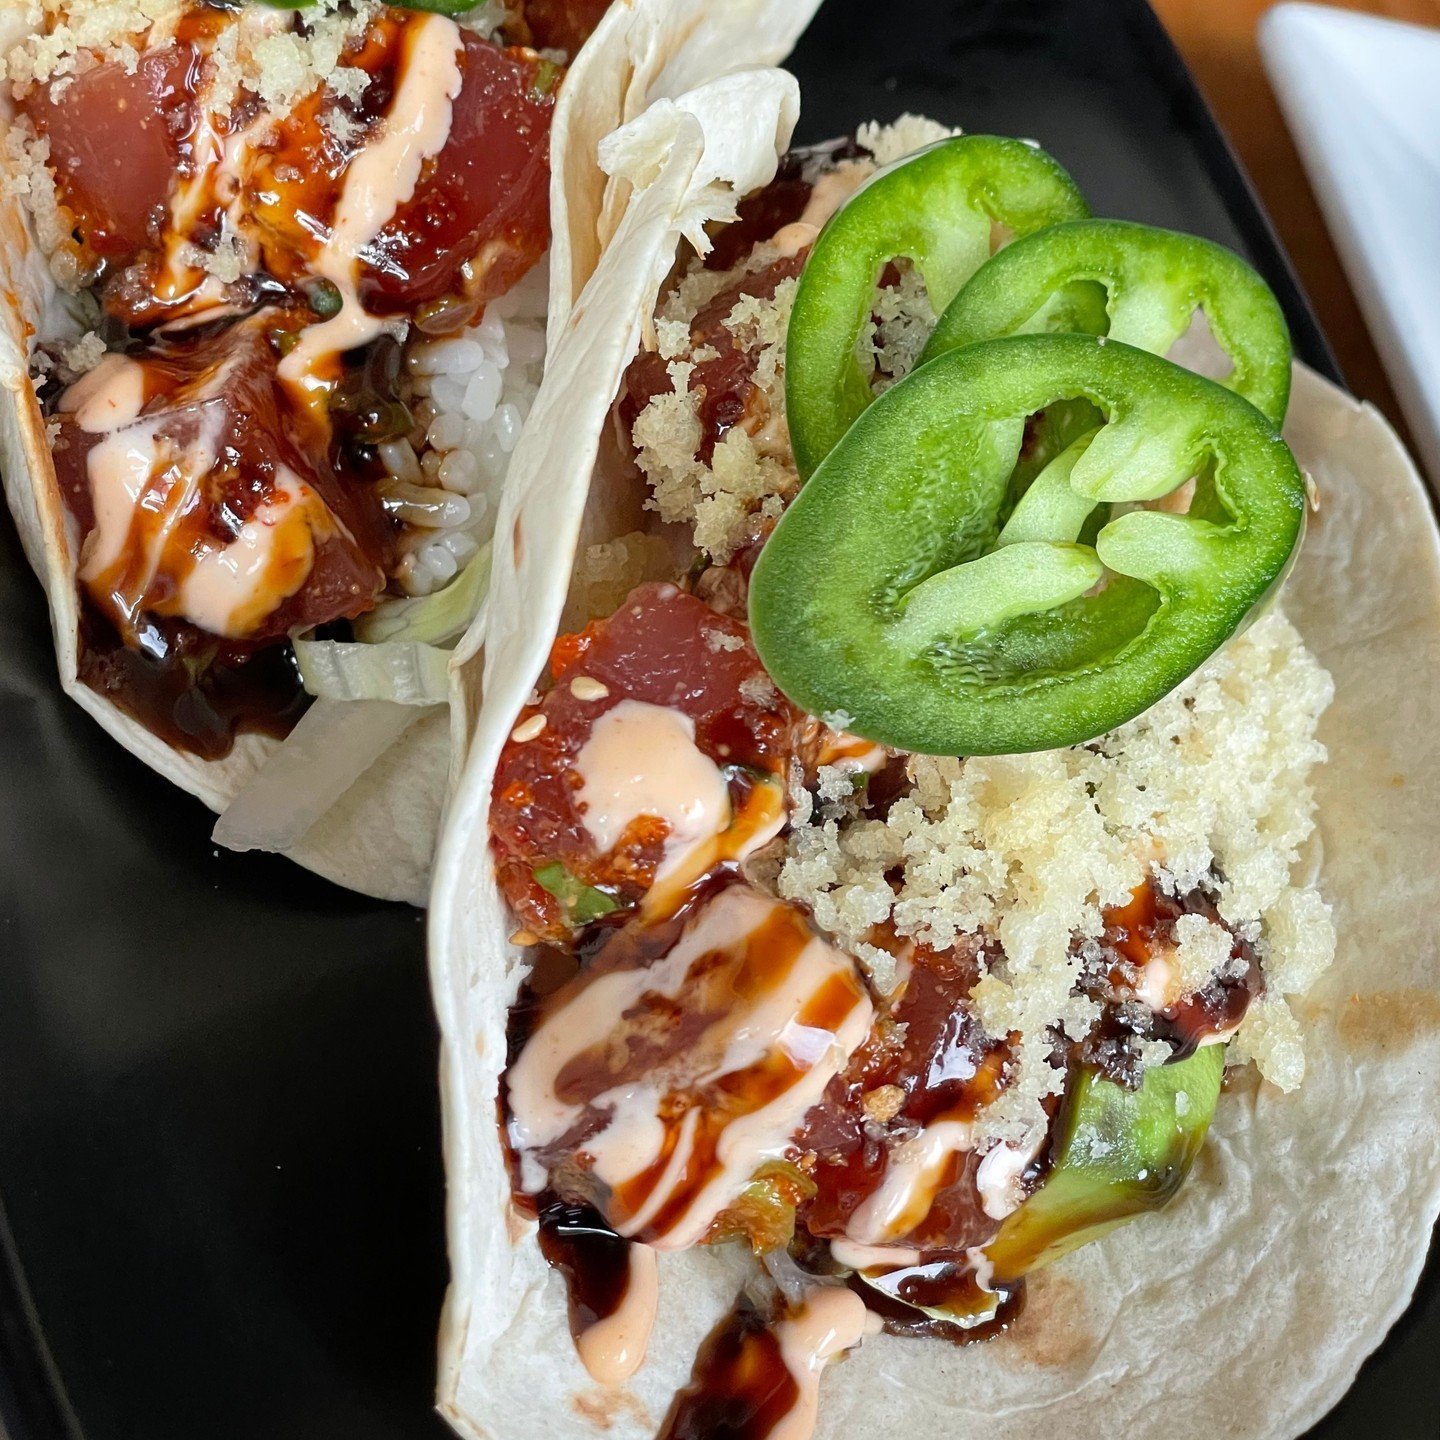 Join us at IYA South Hadley for tuna tacos to start your week!😋
#HappyMonday #tunatacos #foodie #IYASushi